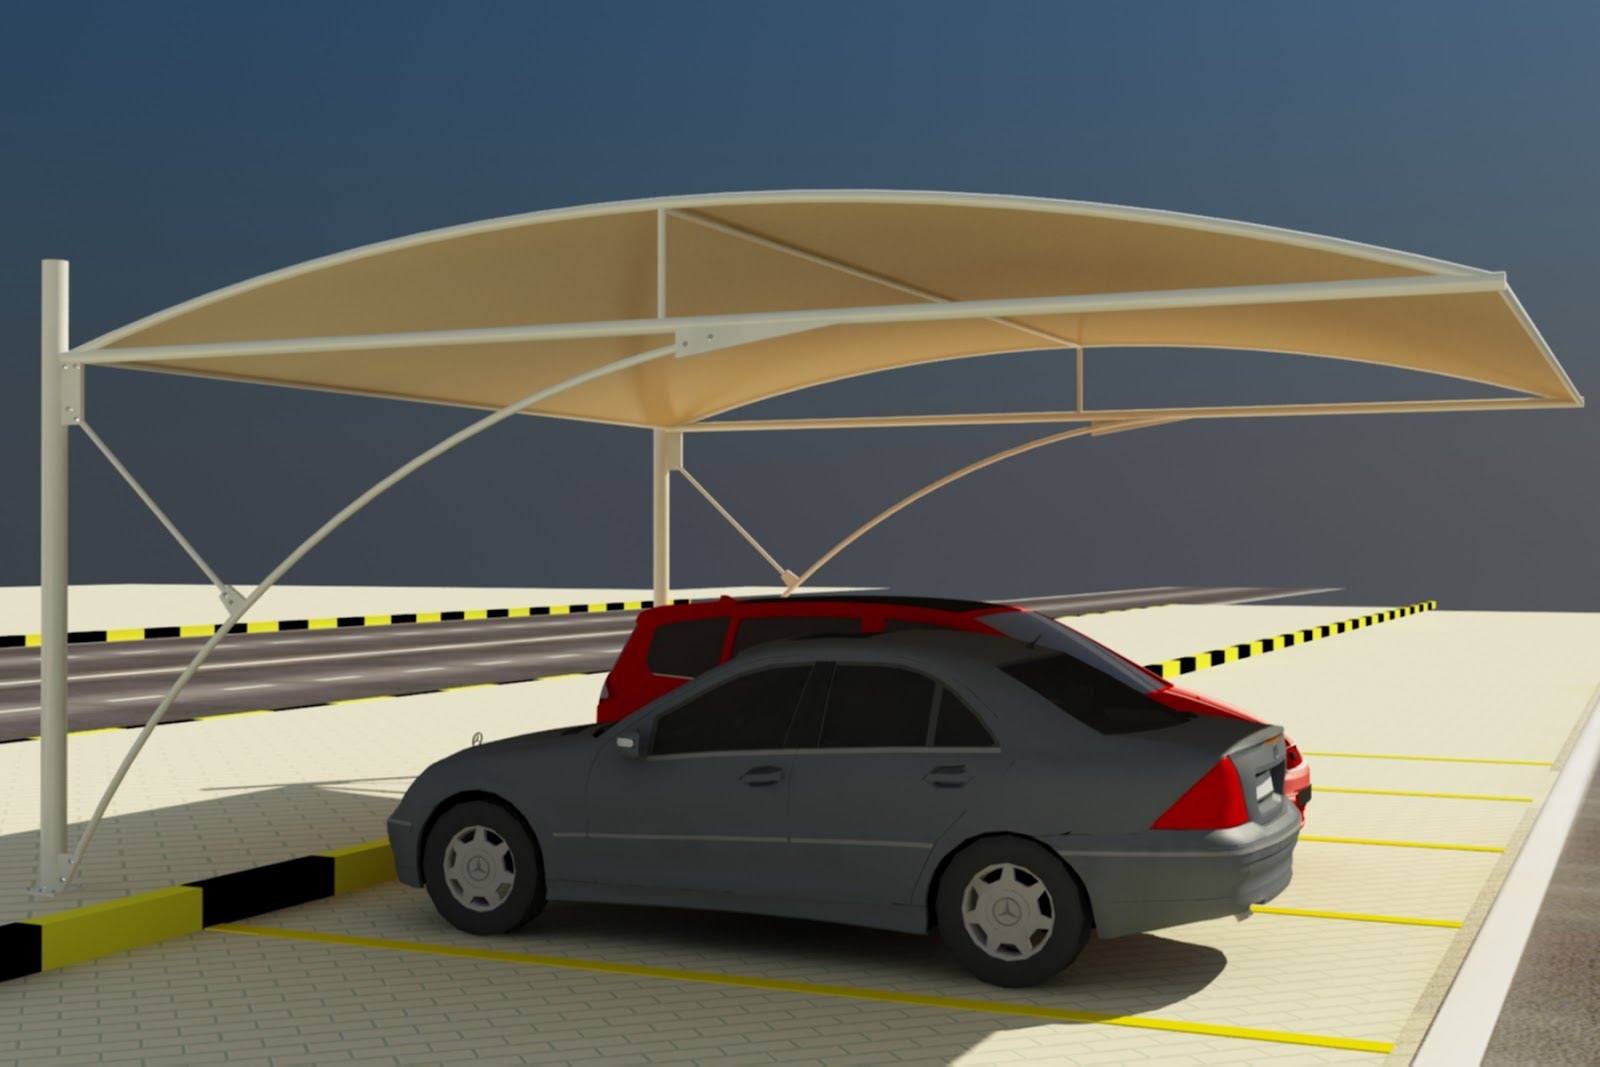 Car Parking Shades Suppliers & Manufacturer in Dubai, UAE